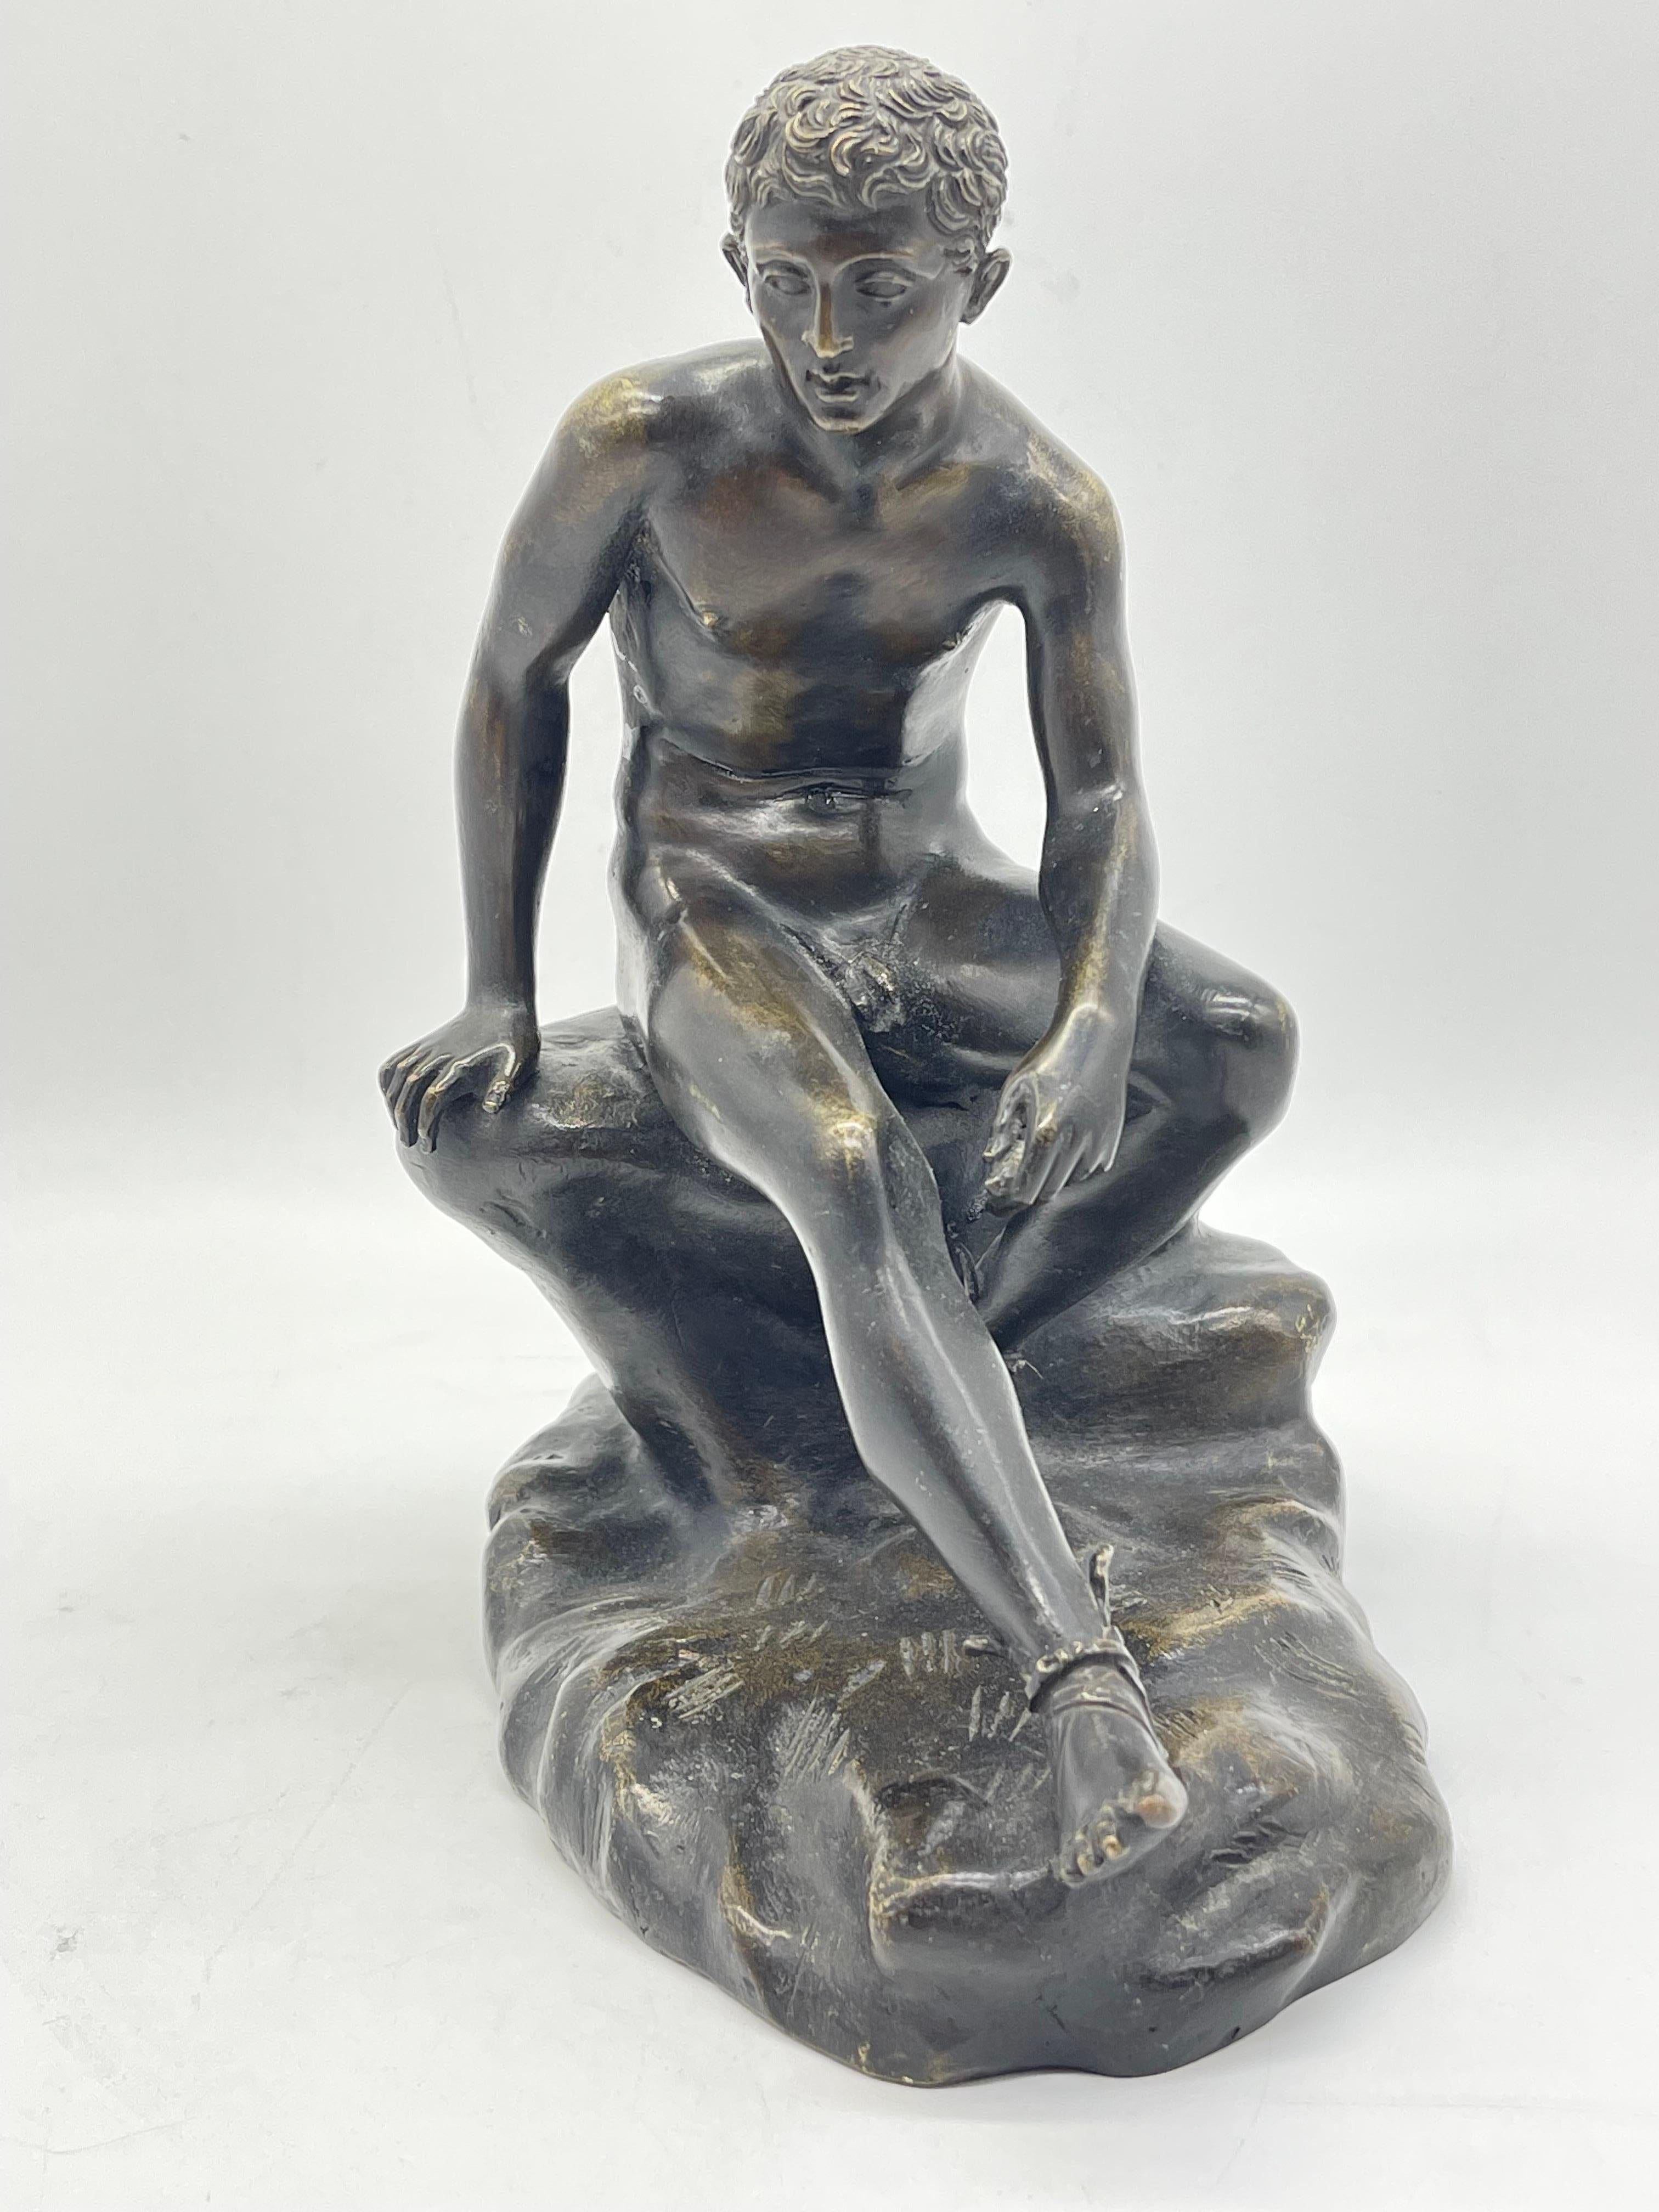 Seated athletic bronze sculpture / Figure Greek - Roman mythology For Sale 3